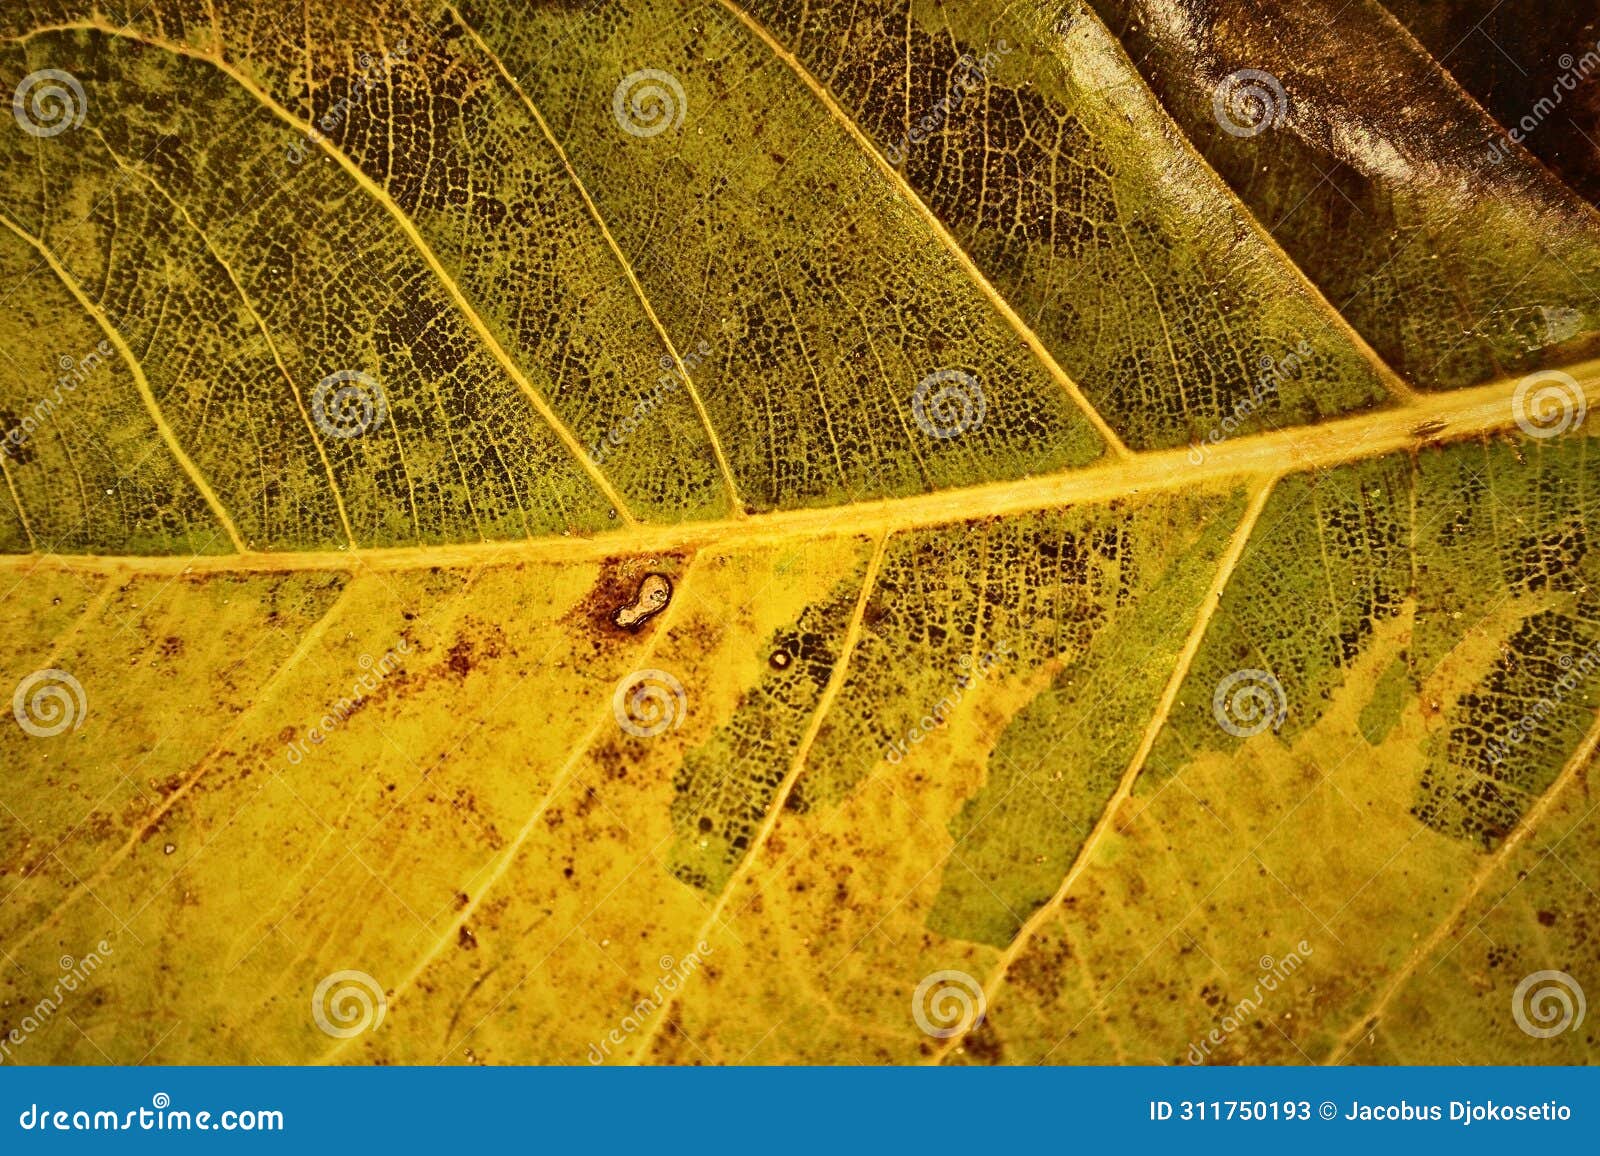 close-up of leaf's midrib and vein